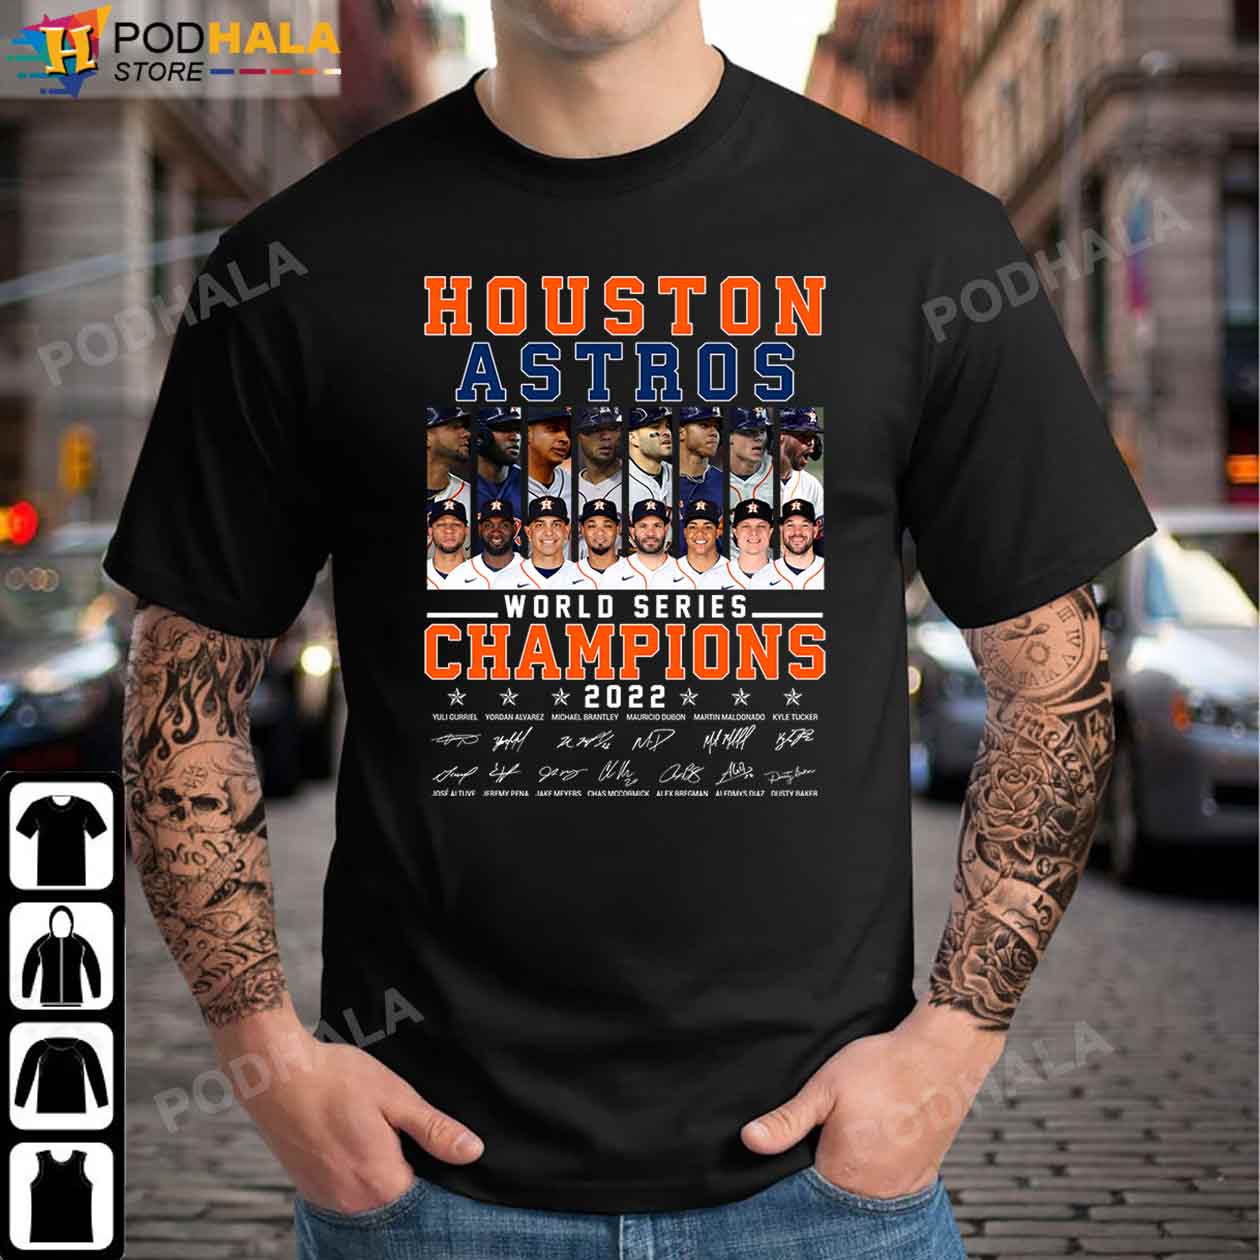 houston astros world series champs shirt